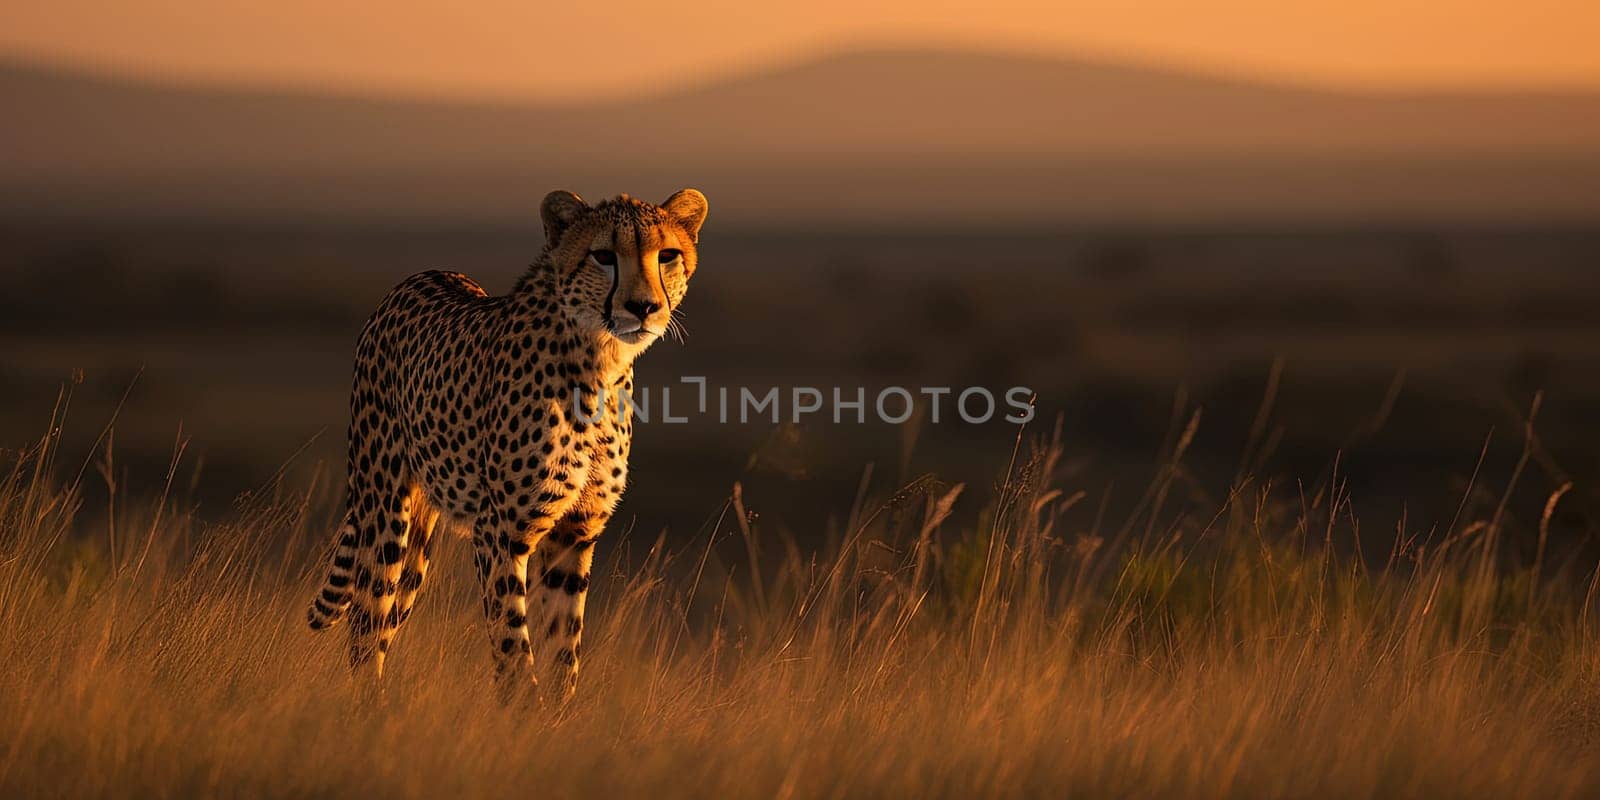 Cheetah wandering through the steppe by tan4ikk1